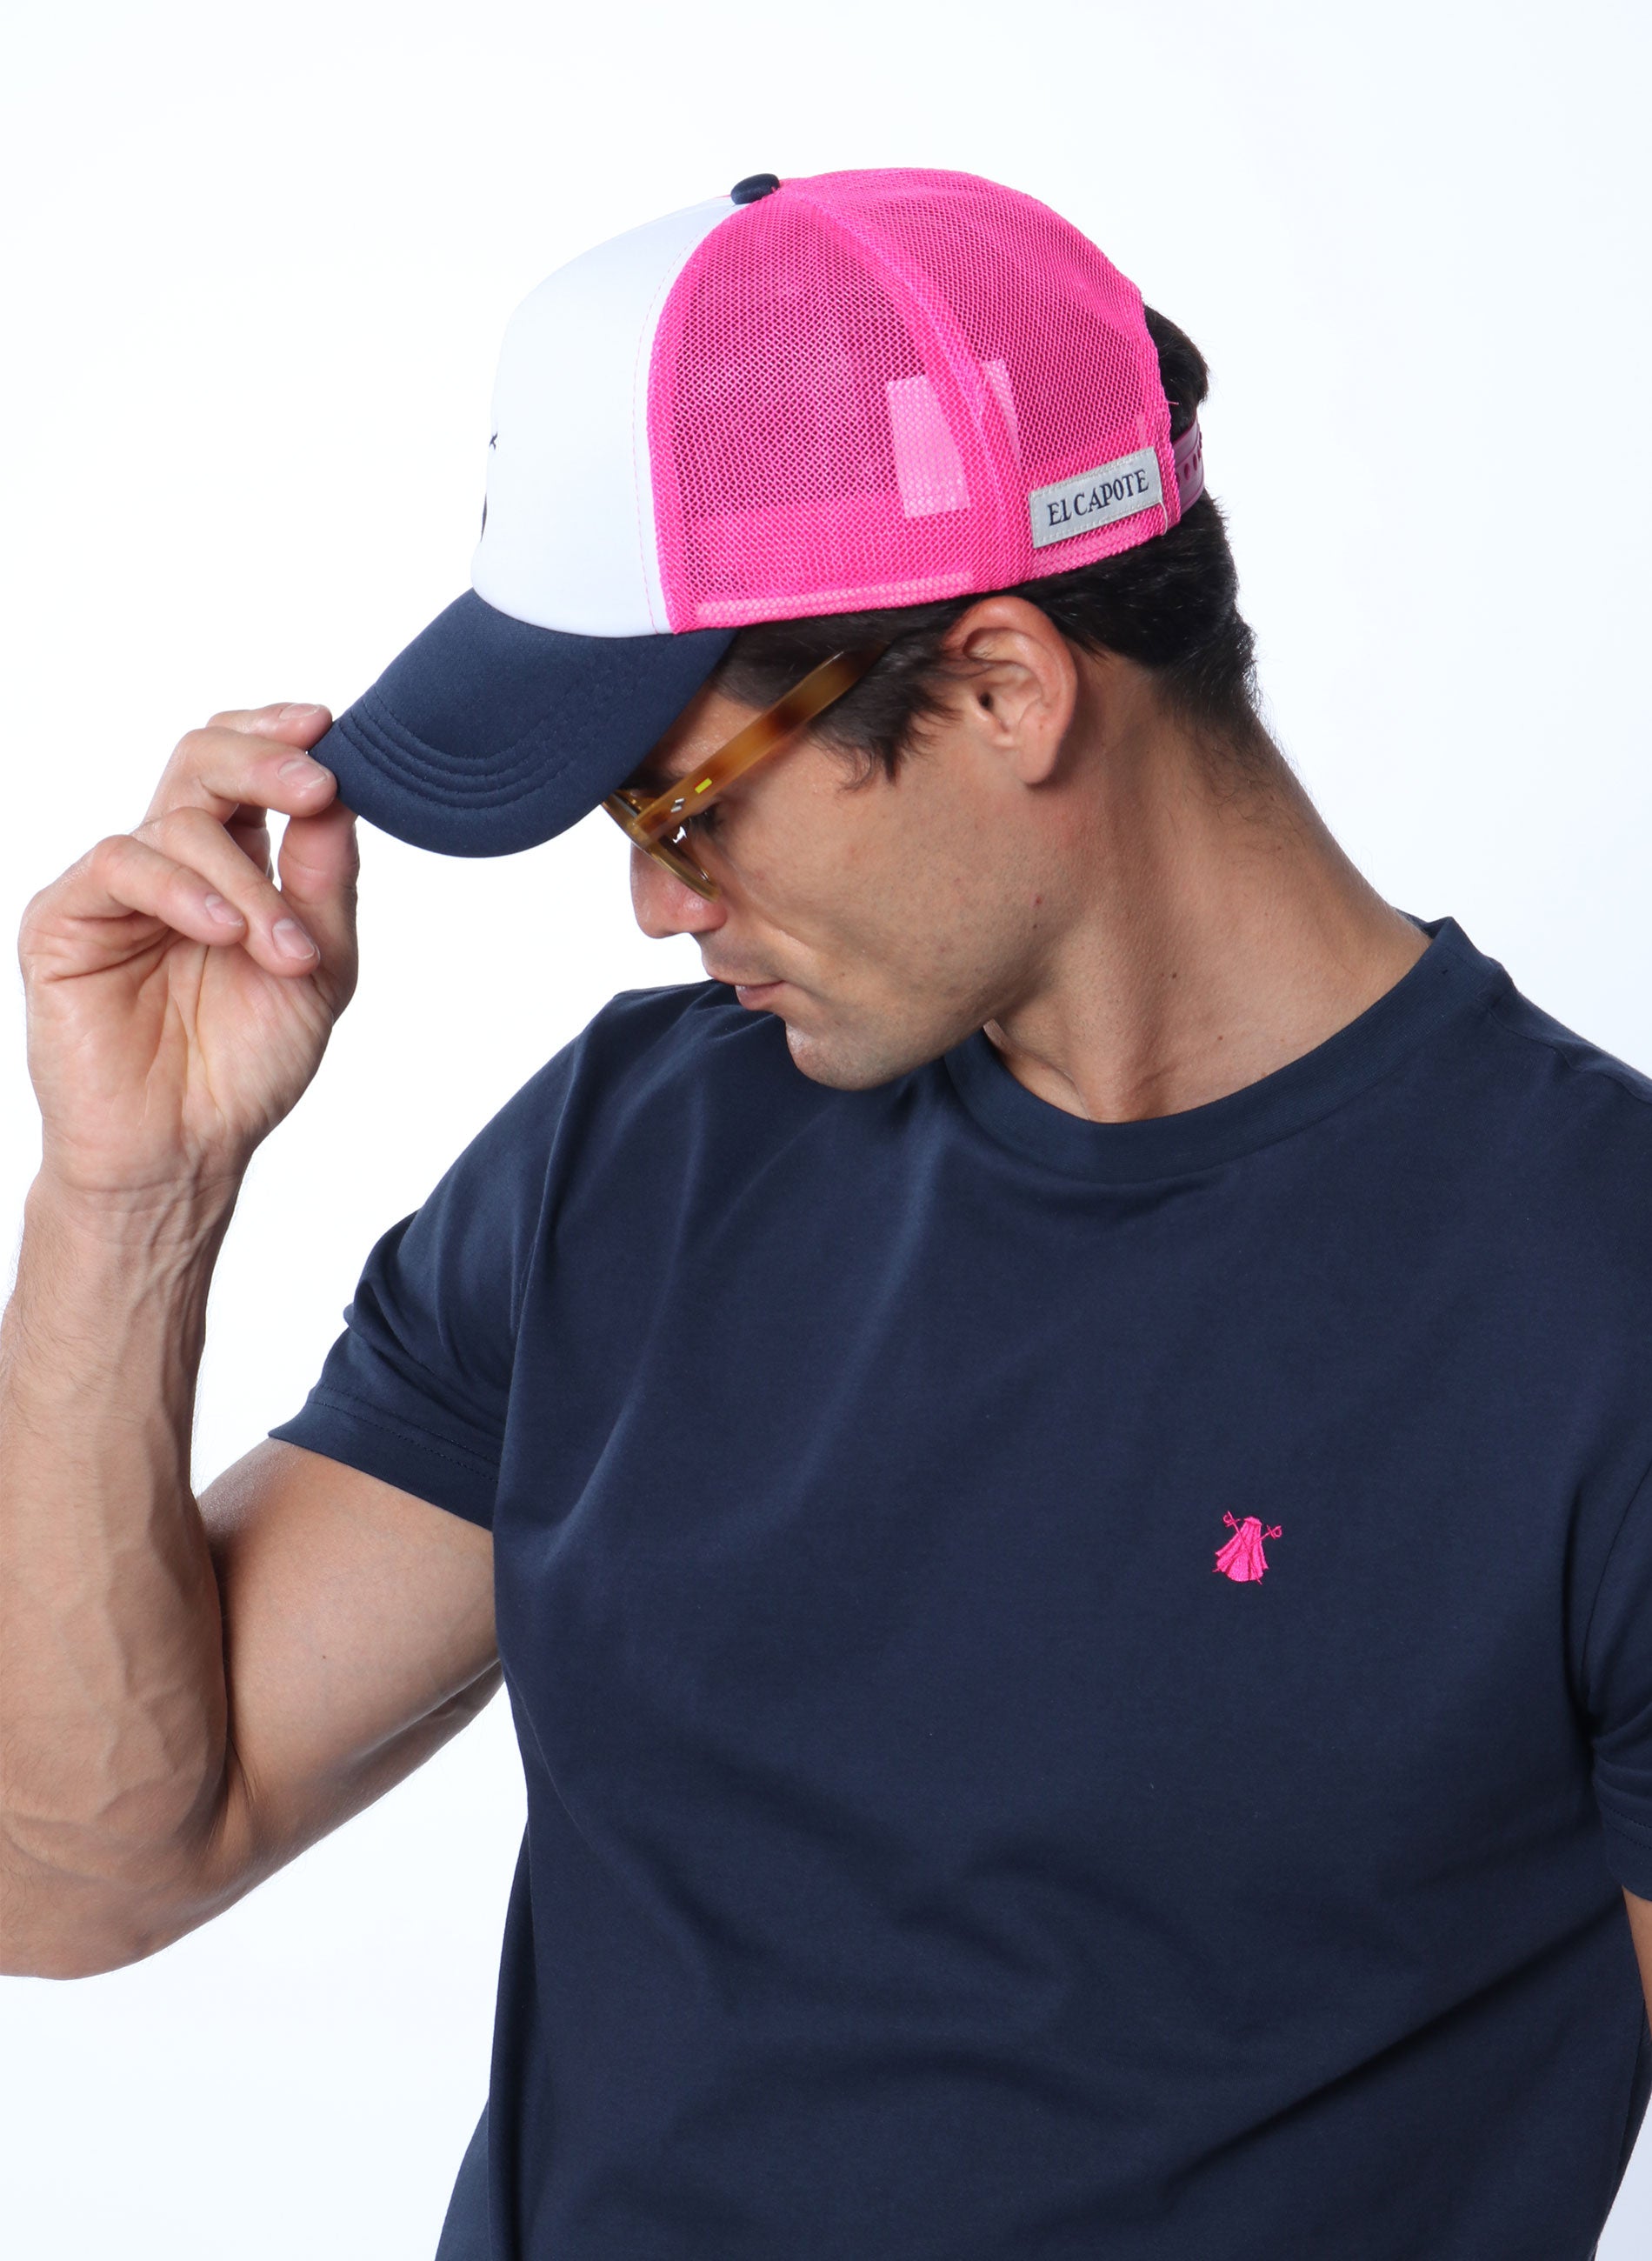 Marineblaues Herren-T-Shirt mit rosa Logo